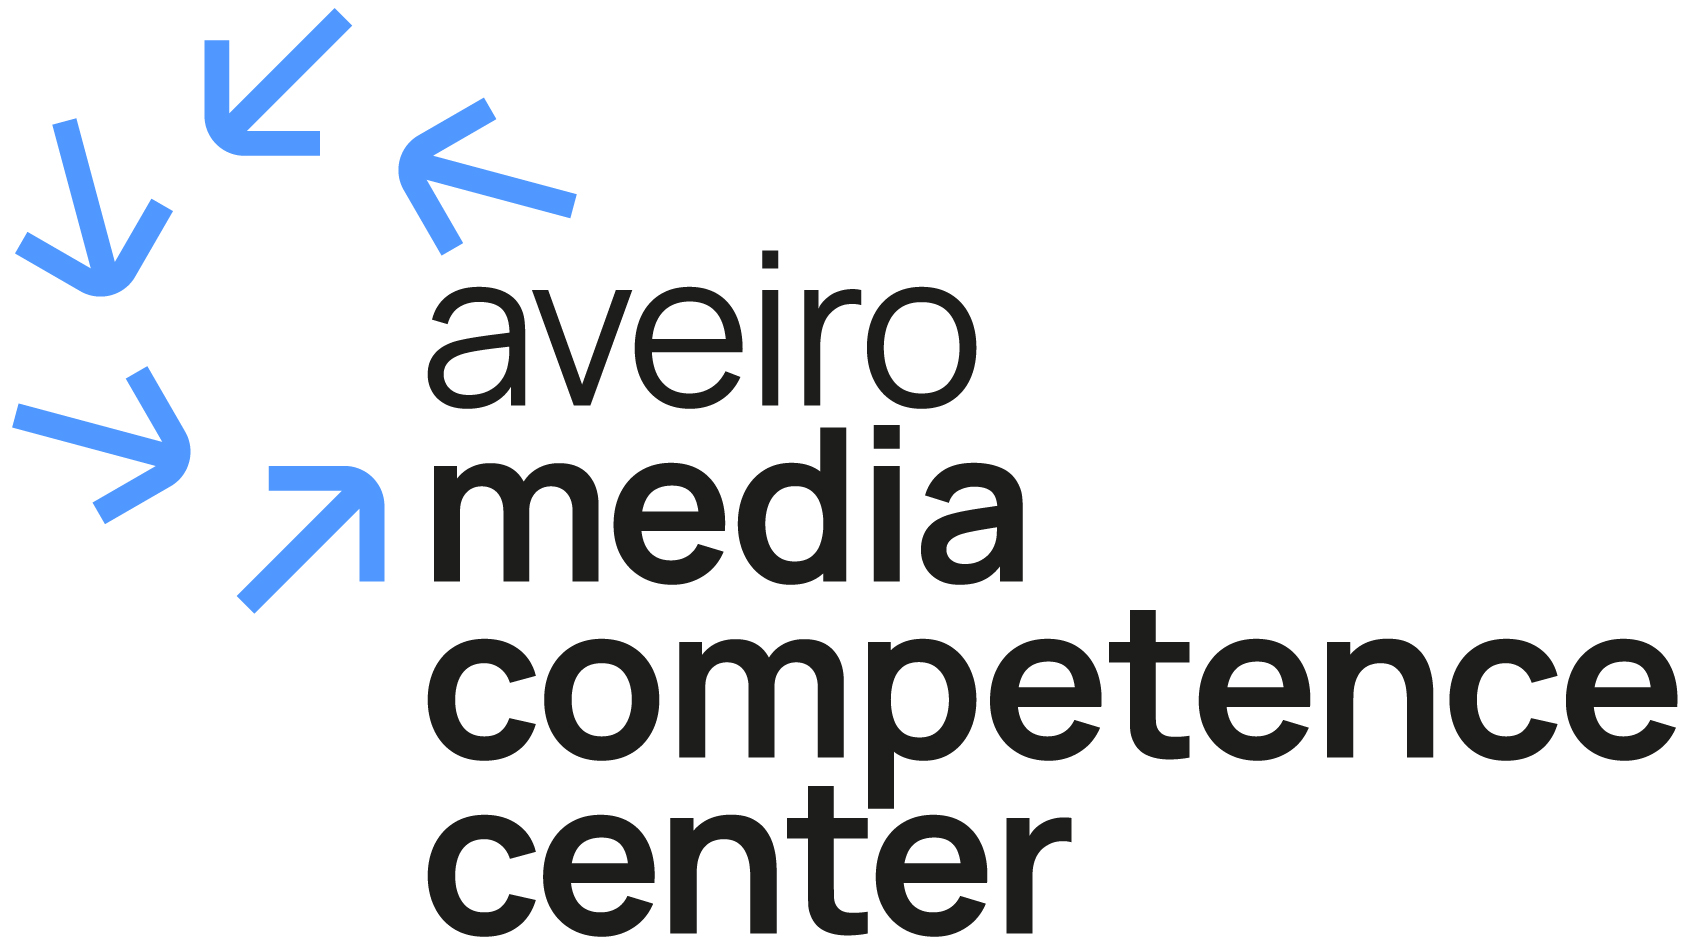 amcc-logo_4-lines-blue-black